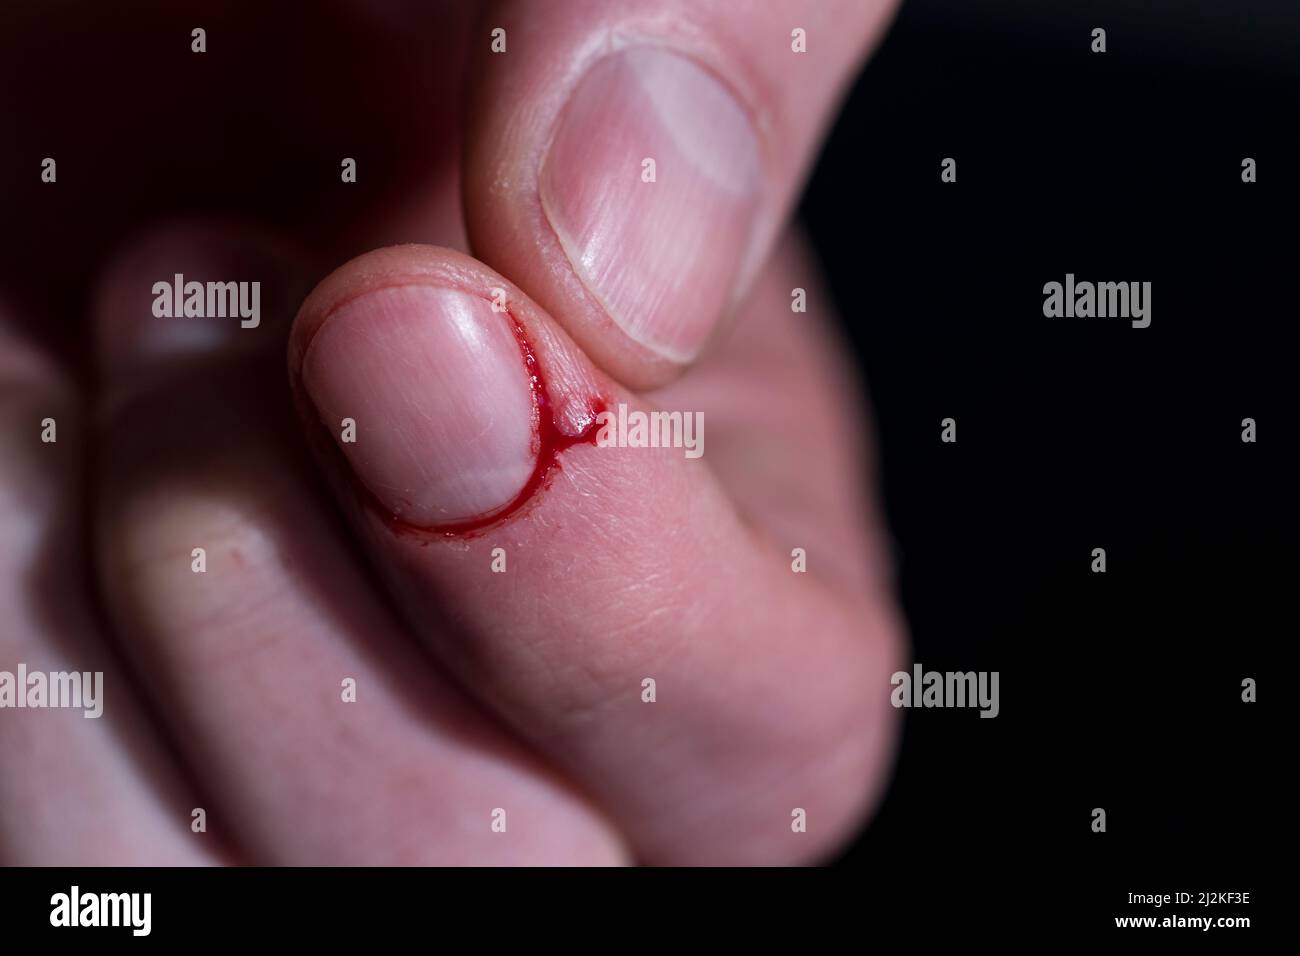 Sliced finger bleeding close up finger injury. Open wound from knife cut on finger tip. Stock Photo